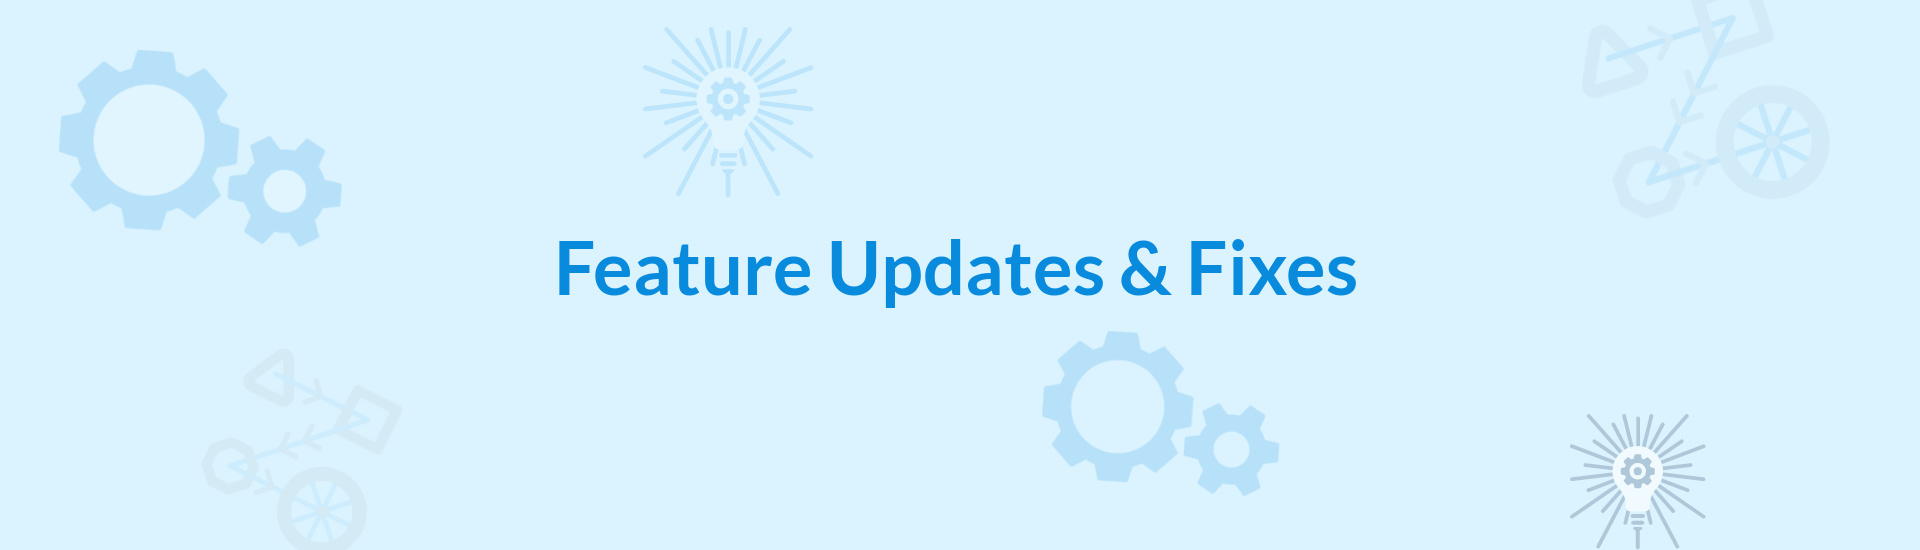 Feature Updates & Fixes